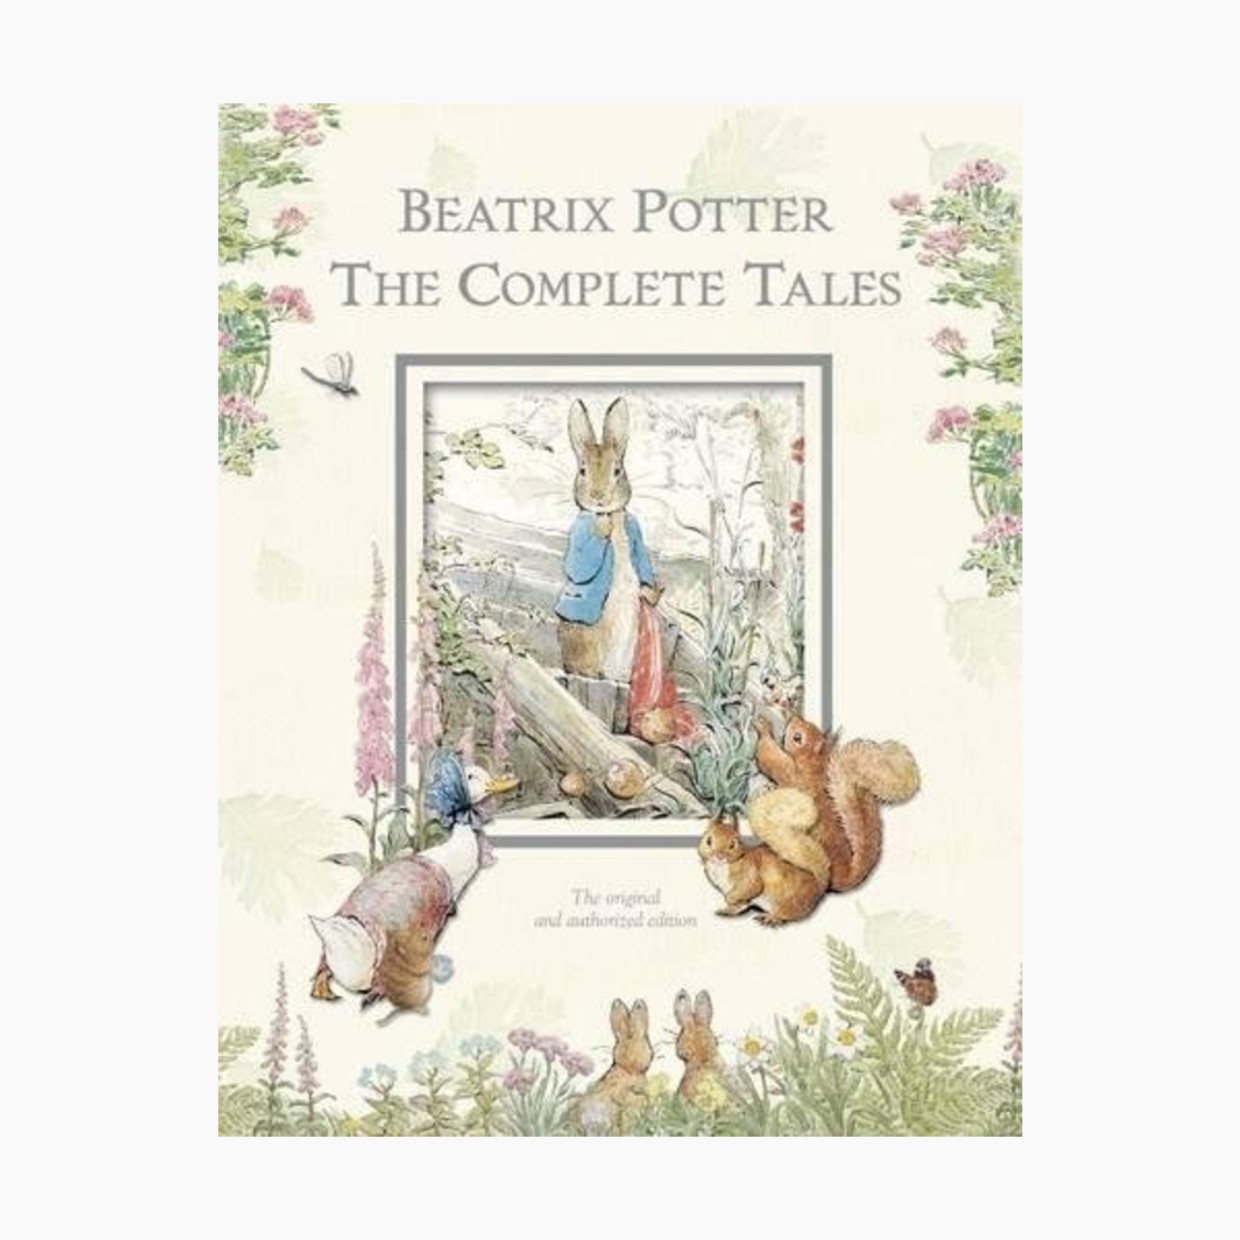 Beatrix Potter the Complete Tales.